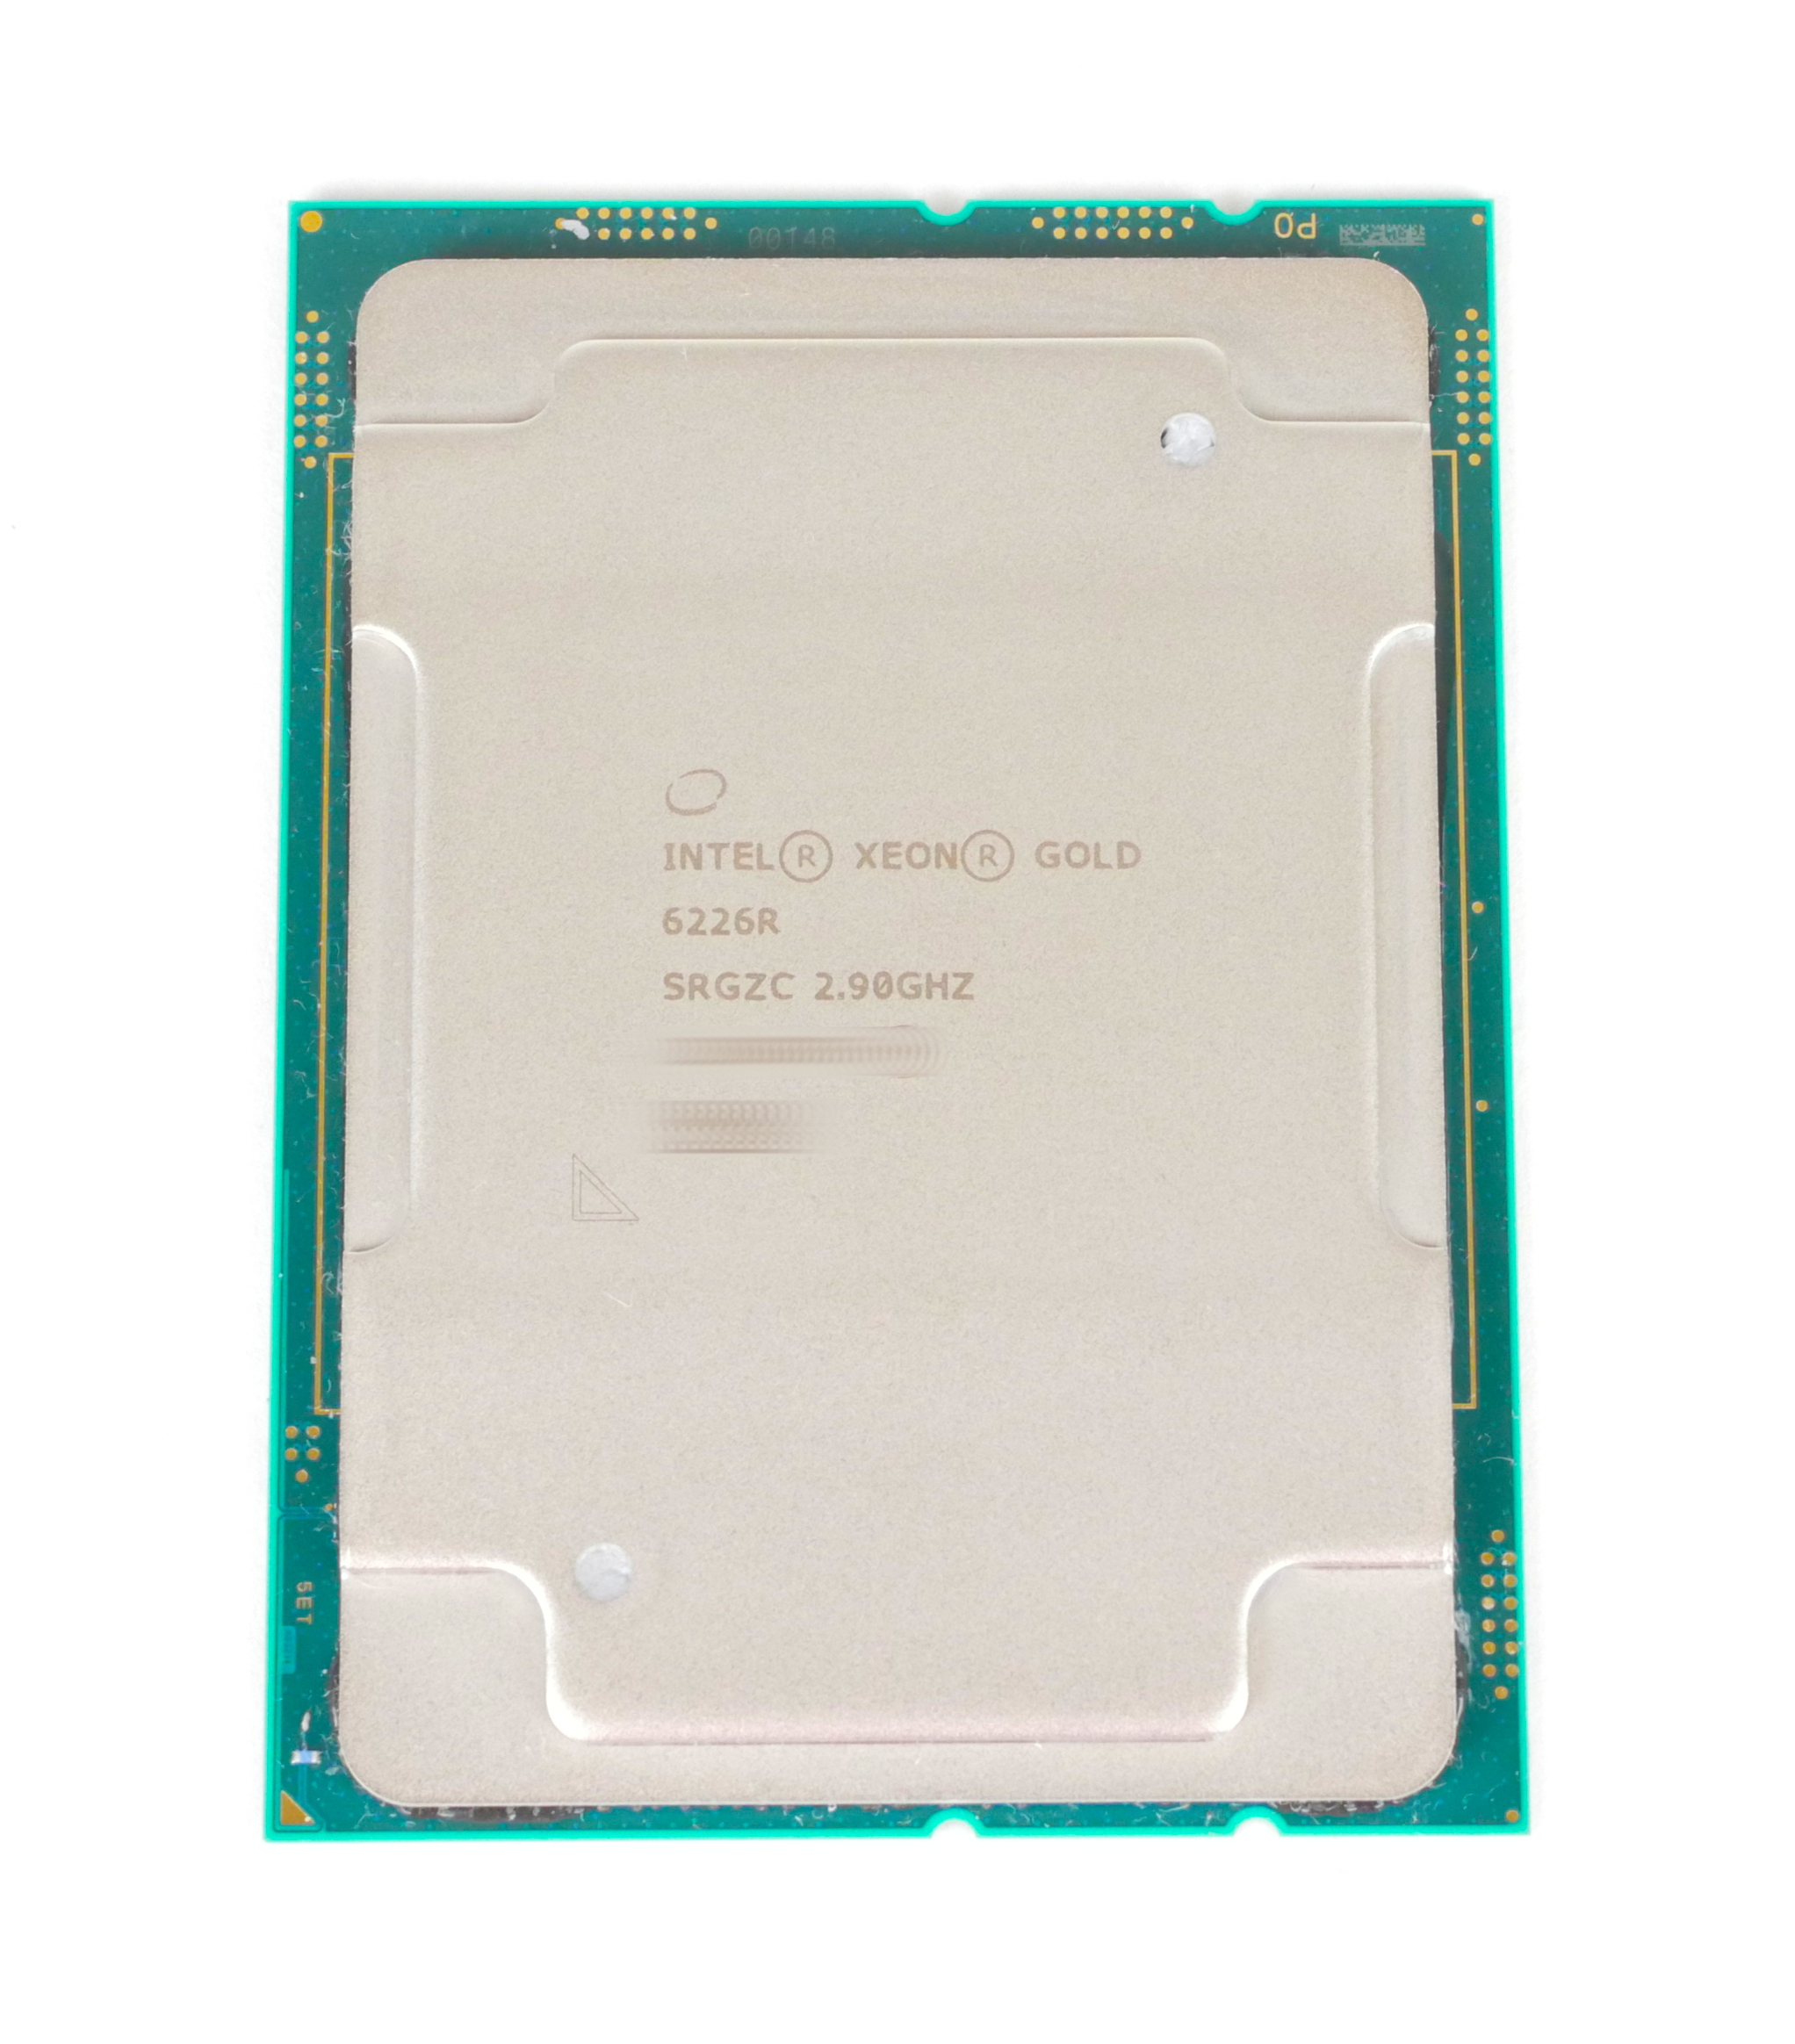 Intel Xeon Gold 6226R 2.9Ghz 16C 32T 22M Cache Socket FCLGA3647 SRGZC P24467-B21